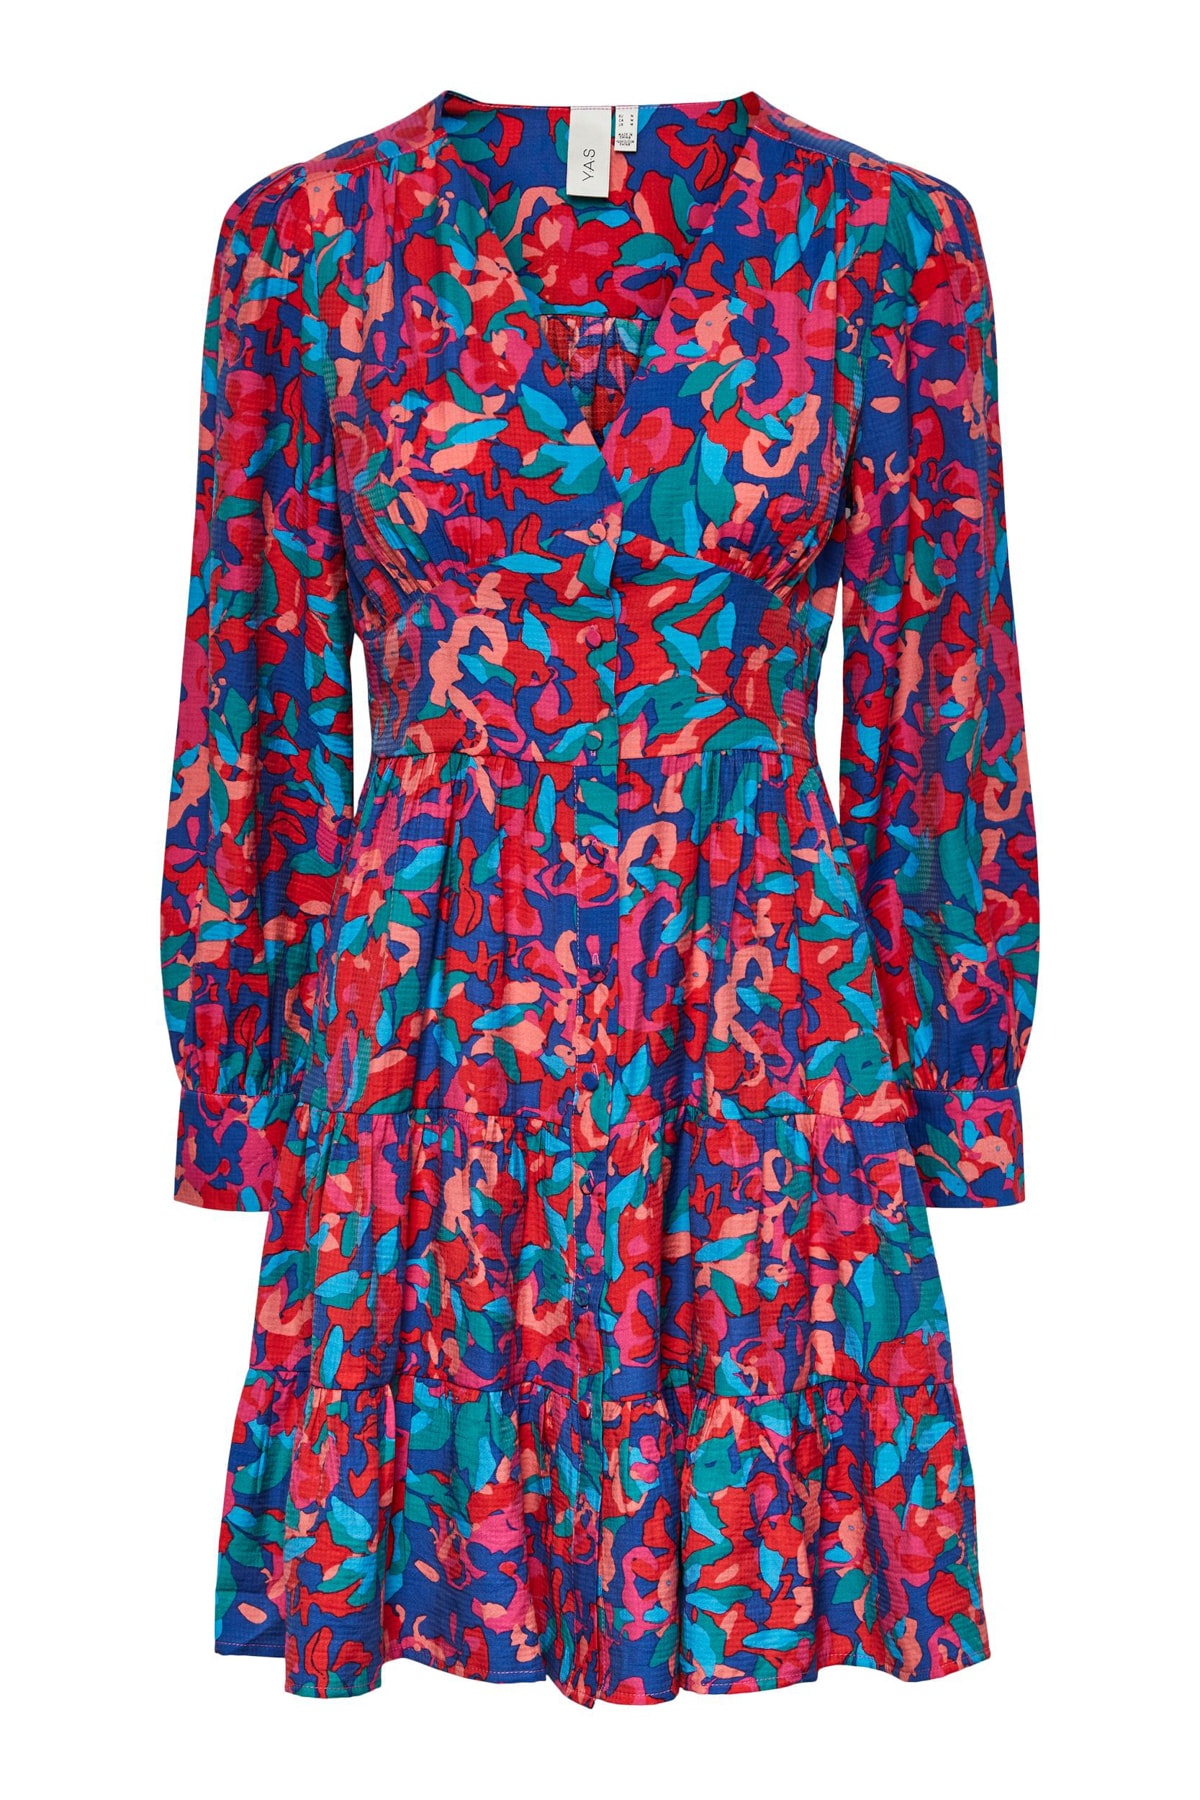 Y.A.S. Kleid Mehrfarbig A-Linie Fast ausverkauft